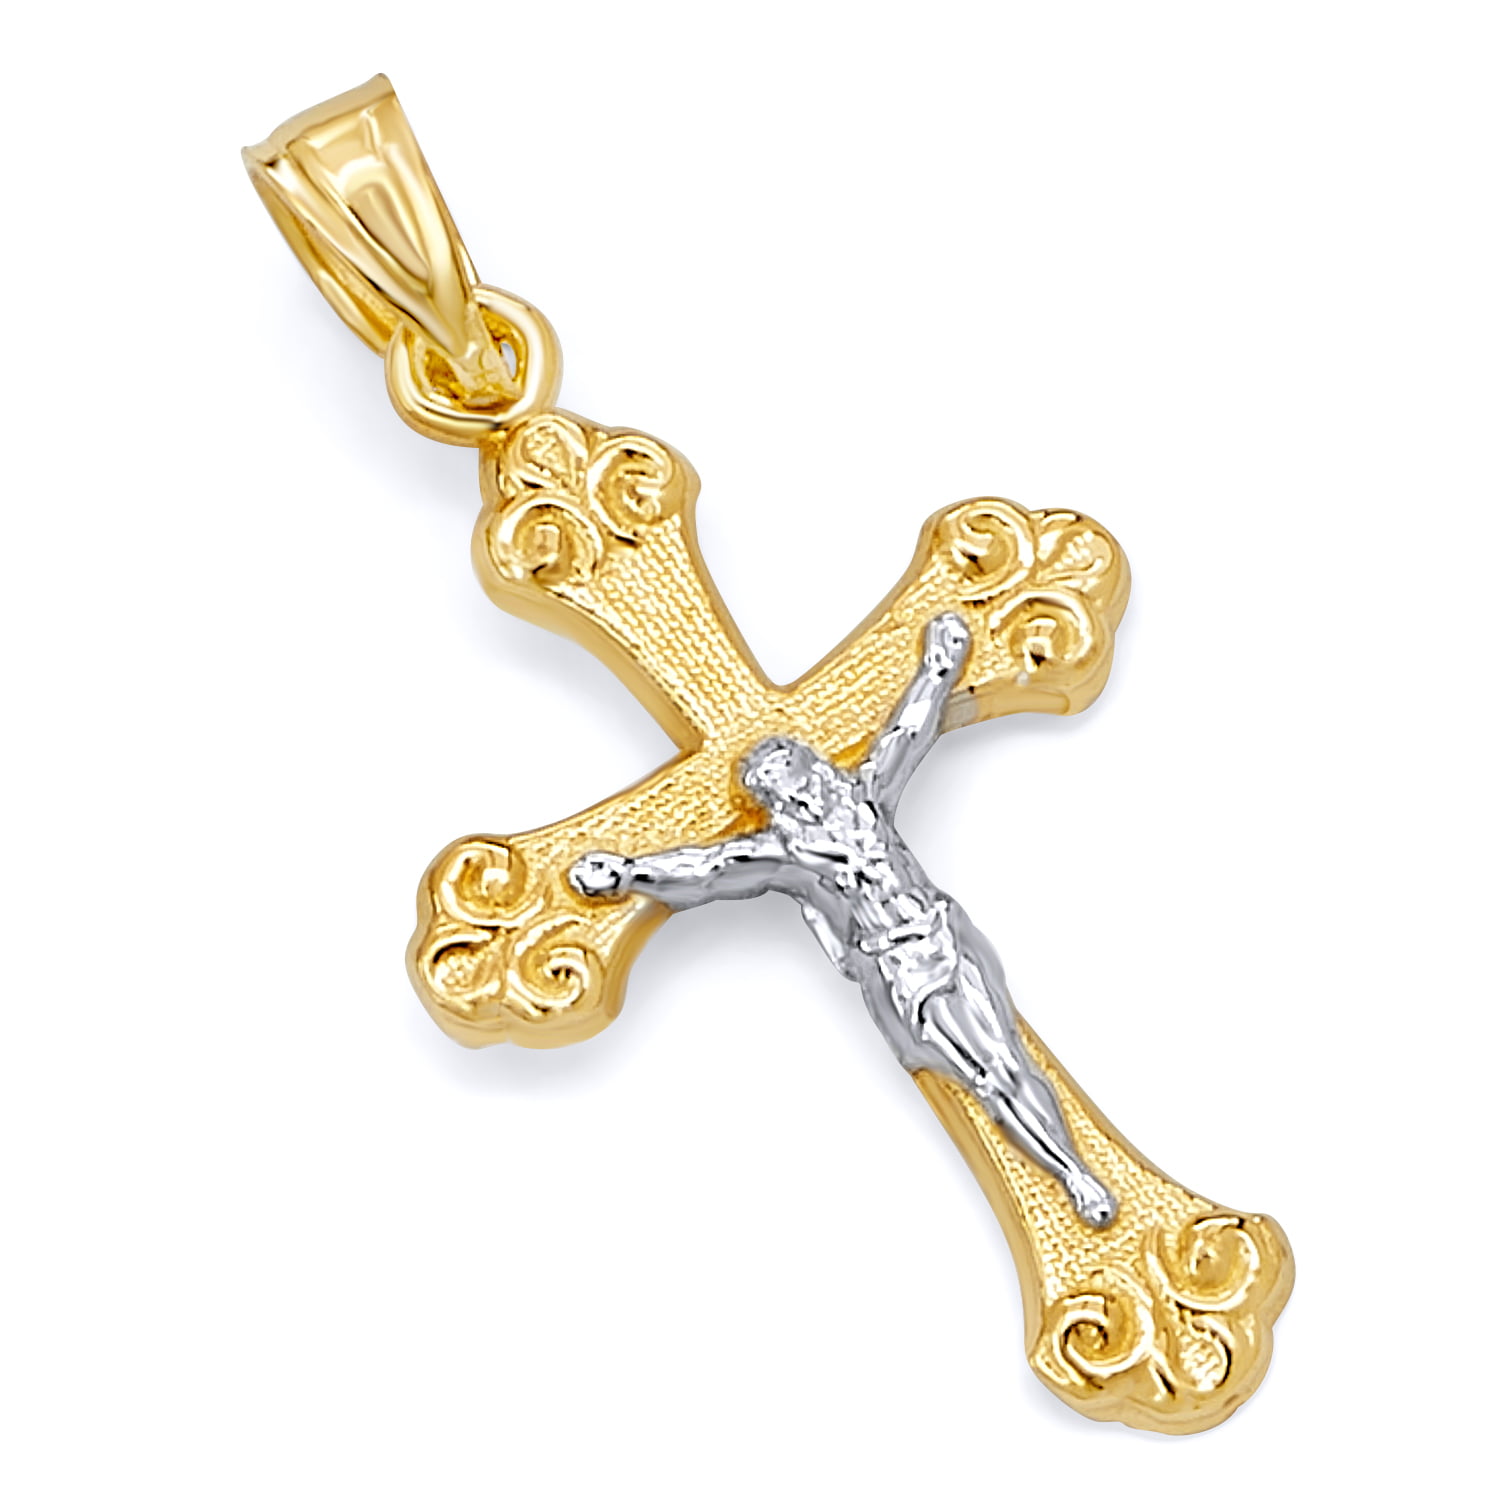 Wellingsale 14K Two 2 Tone White and Yellow Gold Polished Diamond Cut Ornate Religious Catholic Gothic Crucifix Pendant with CZ Accents 